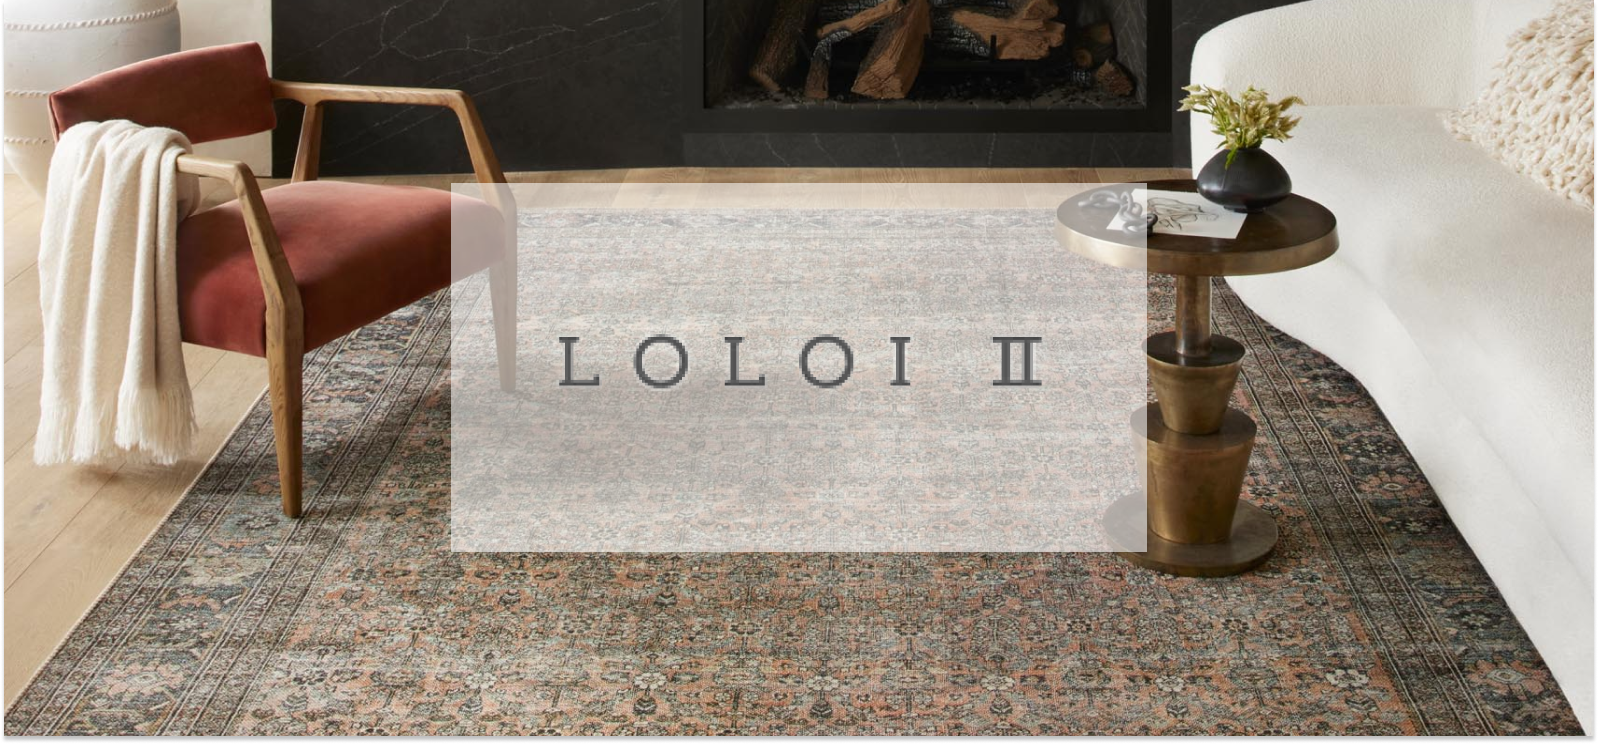 Loloi-banner